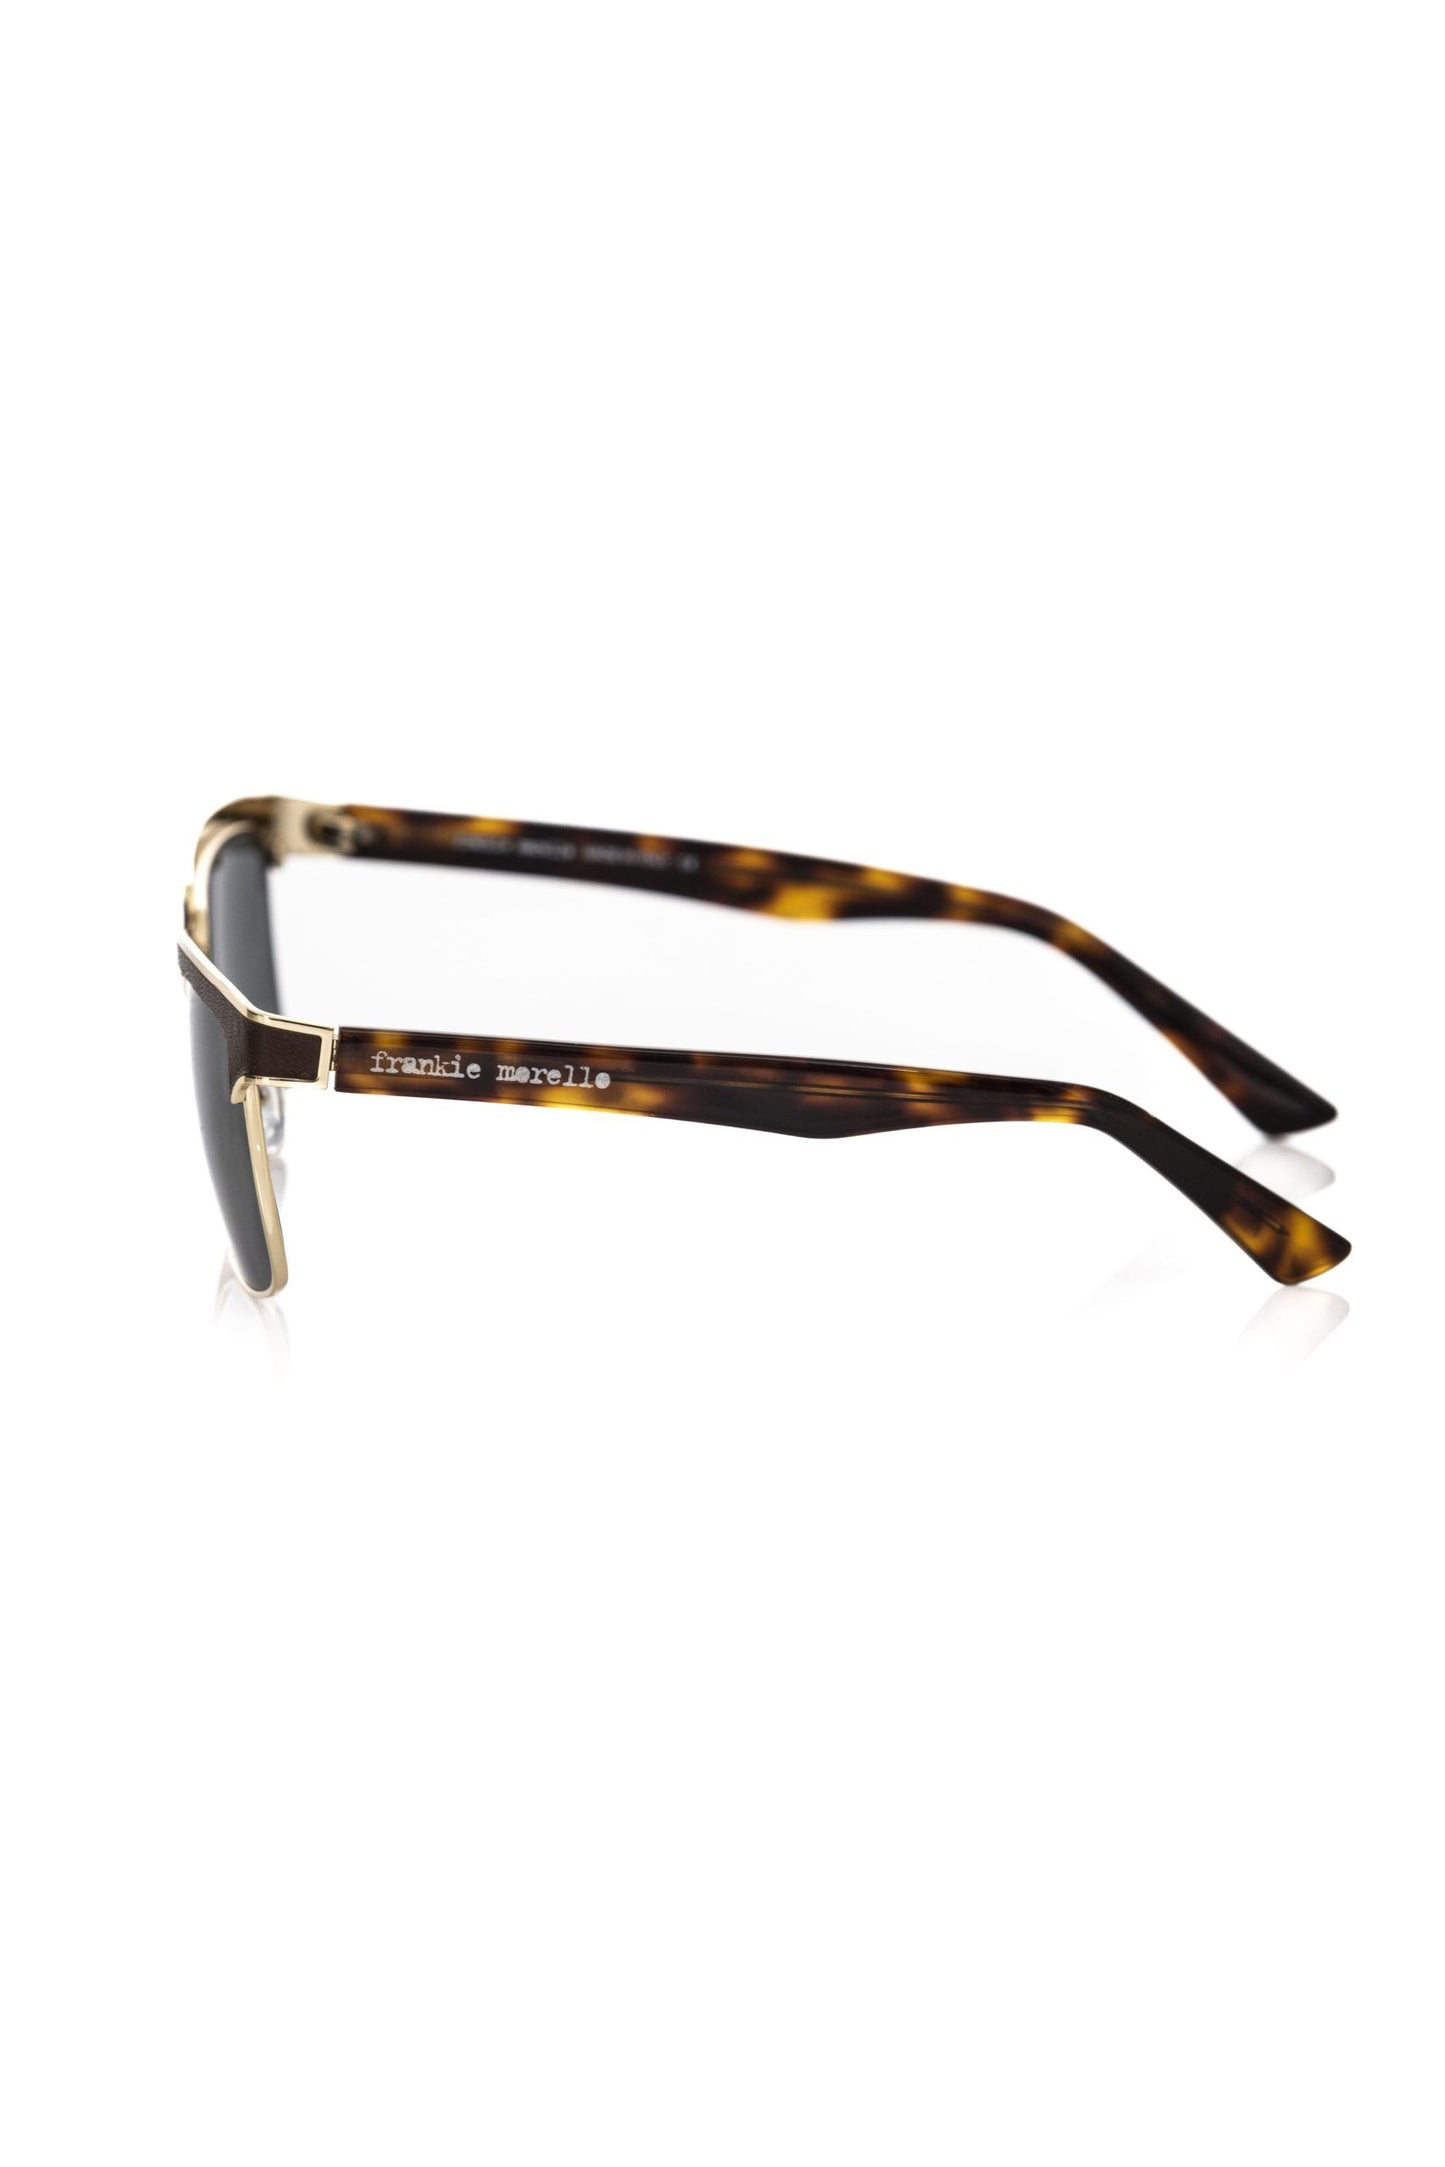 Frankie Morello FRMO-22134 Brown Metallic Fibre Sunglasses